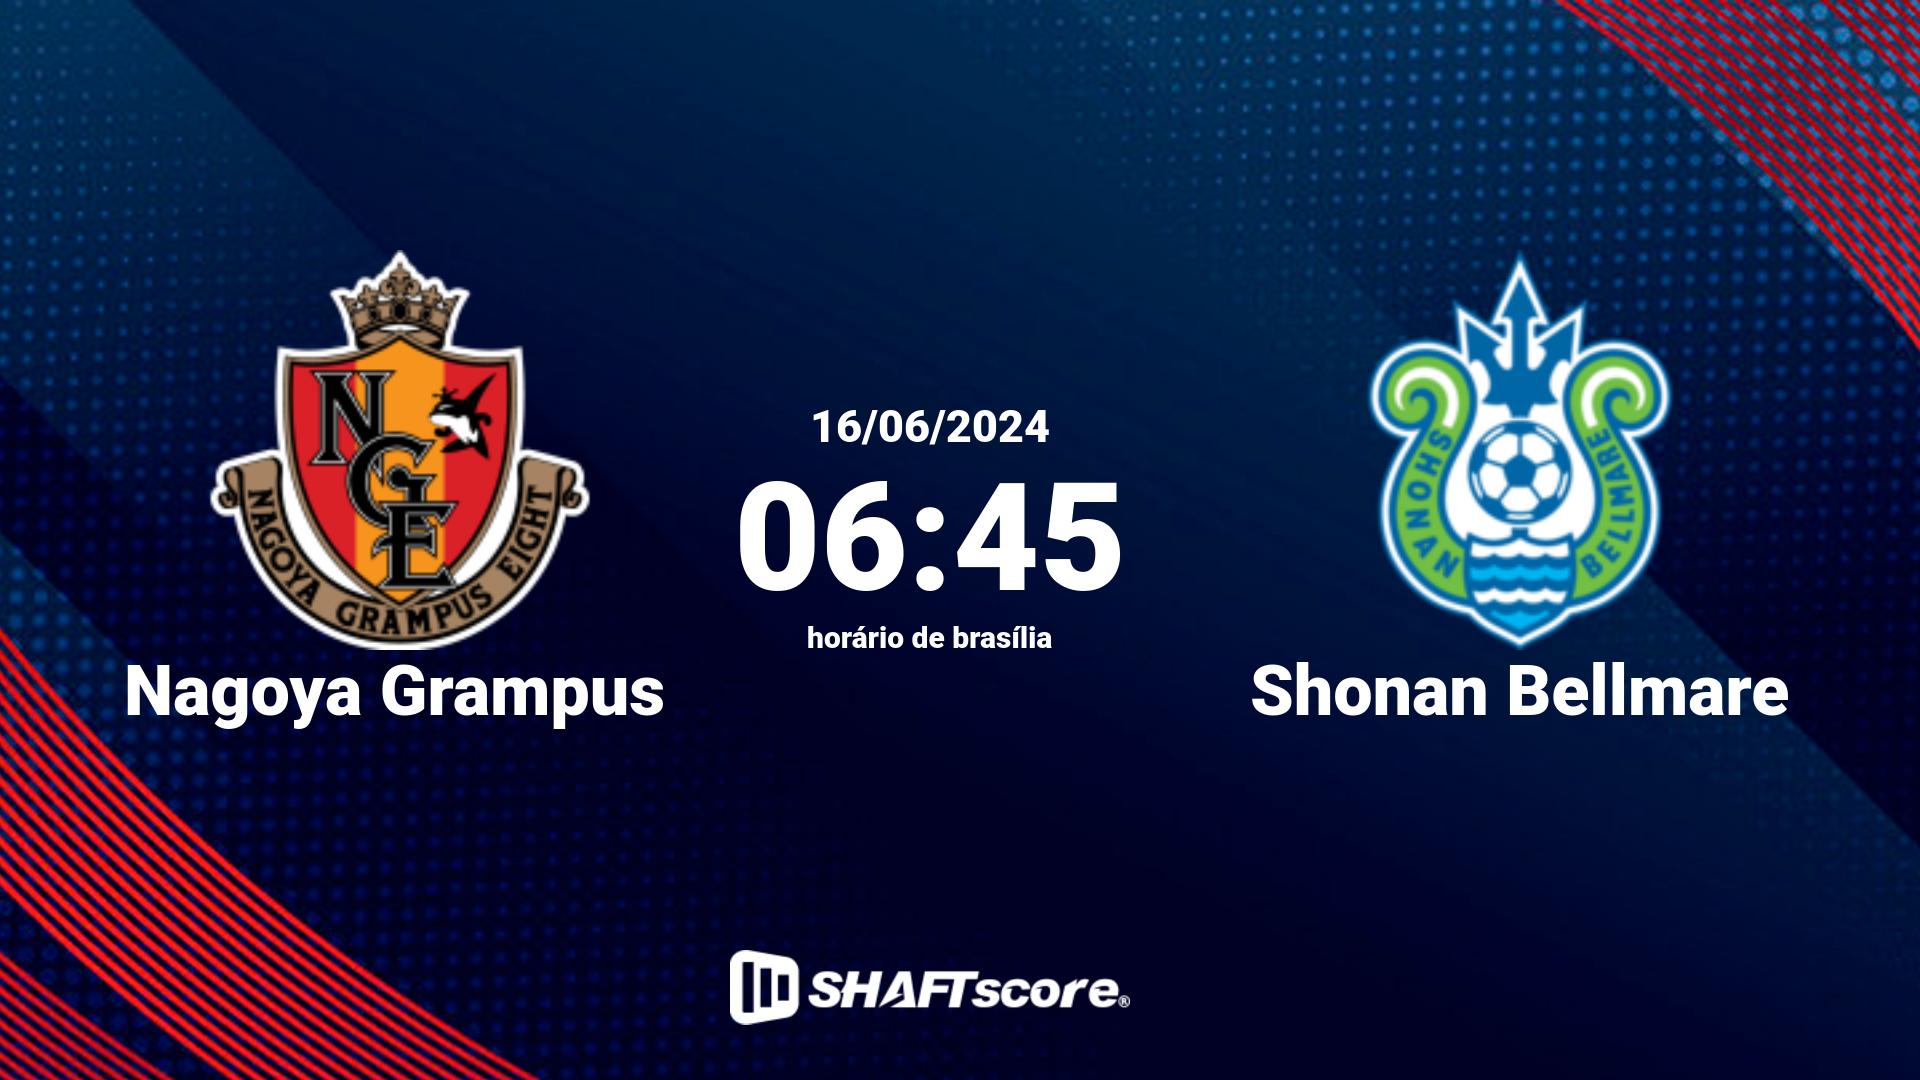 Estatísticas do jogo Nagoya Grampus vs Shonan Bellmare 16.06 06:45